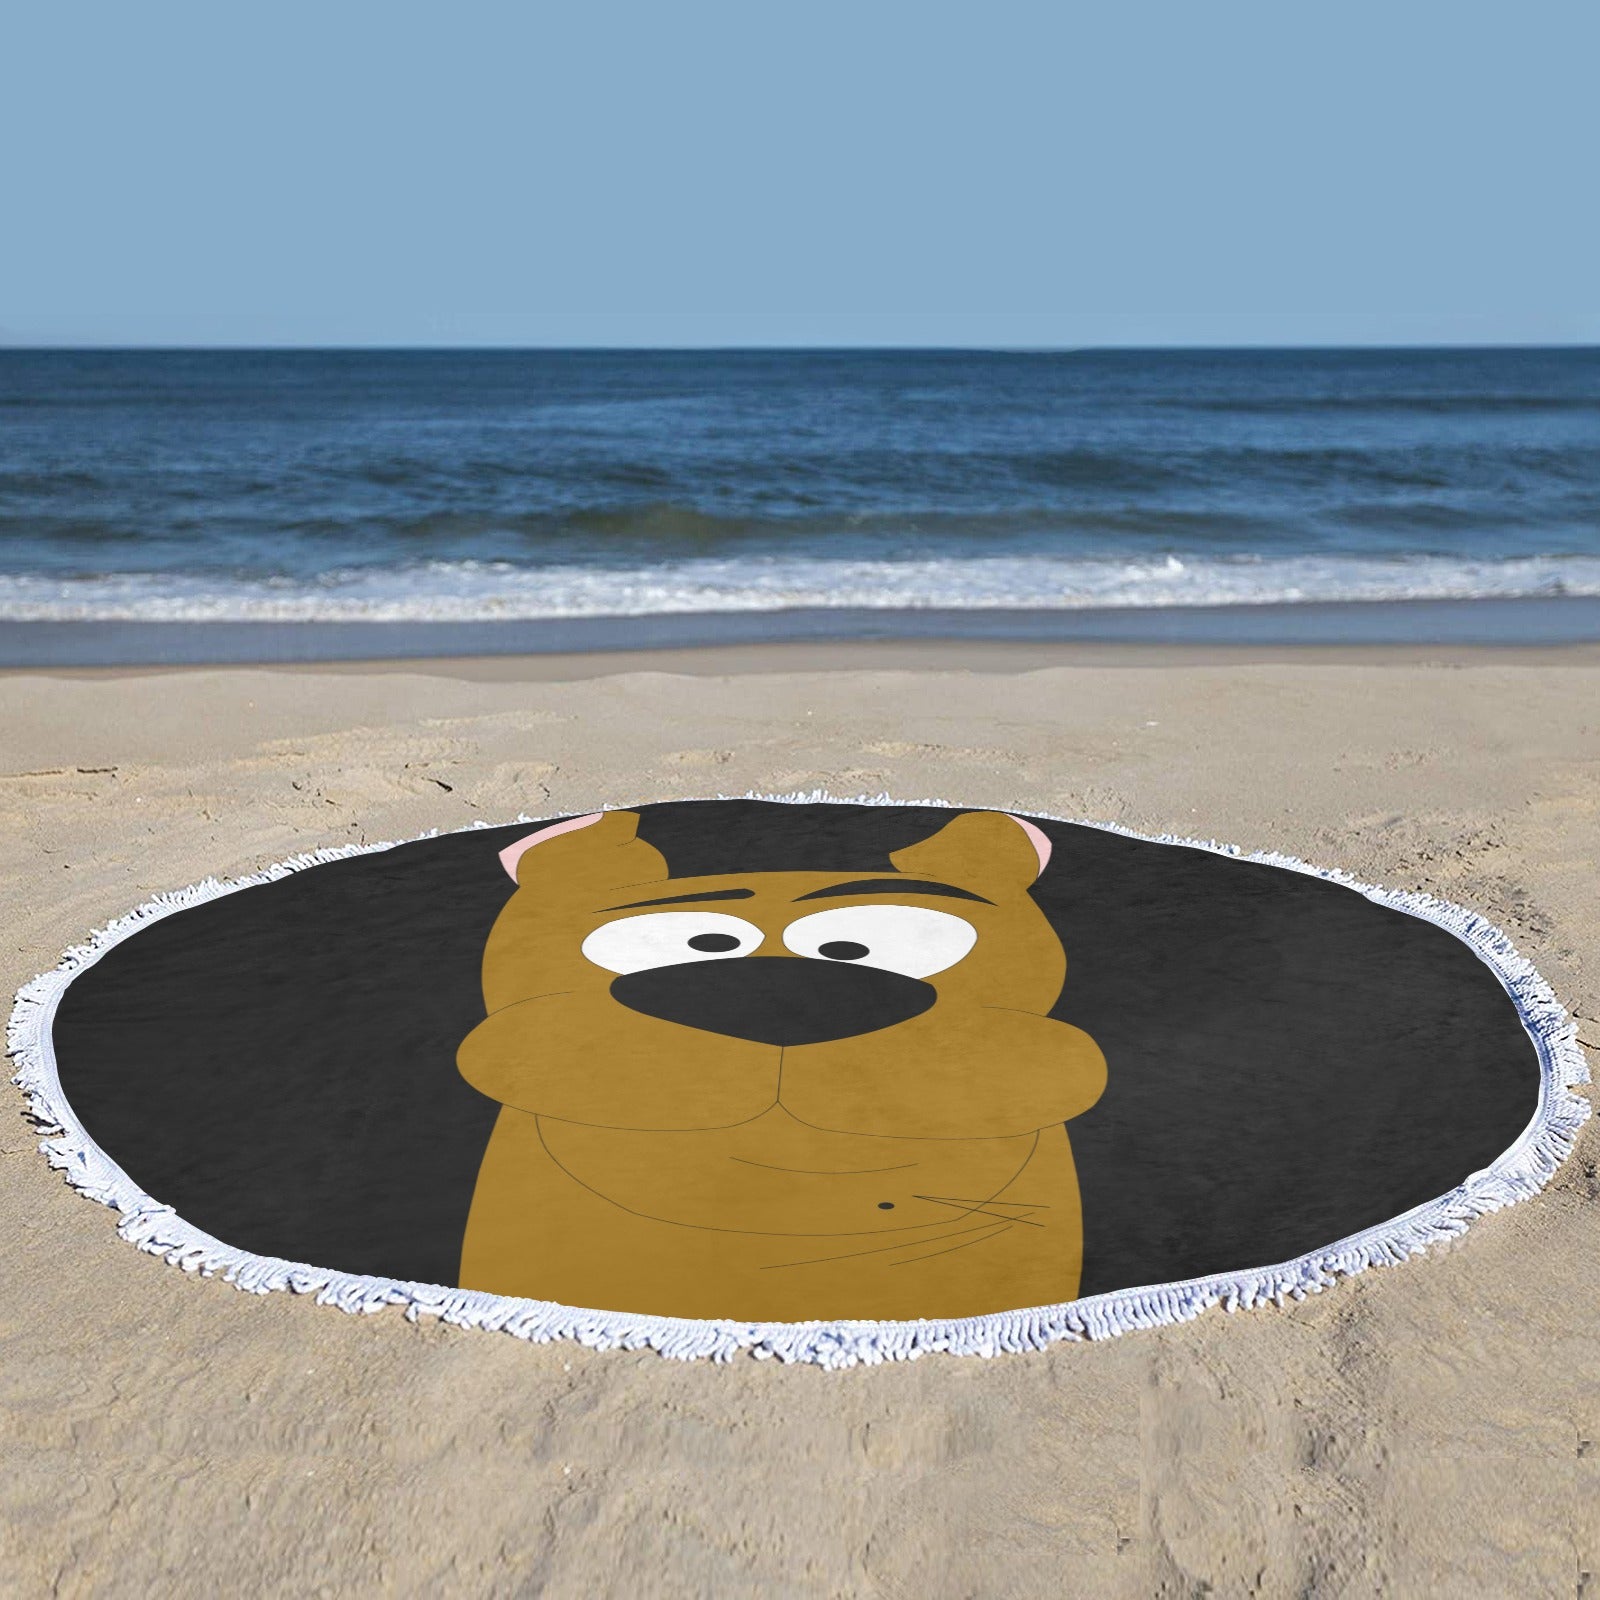 Scooby Doo Circular Beach Shawl Towel 59"x 59" - Circular Beach Shawl Towel 59"x 59" - Zanlana Design and Home Decor